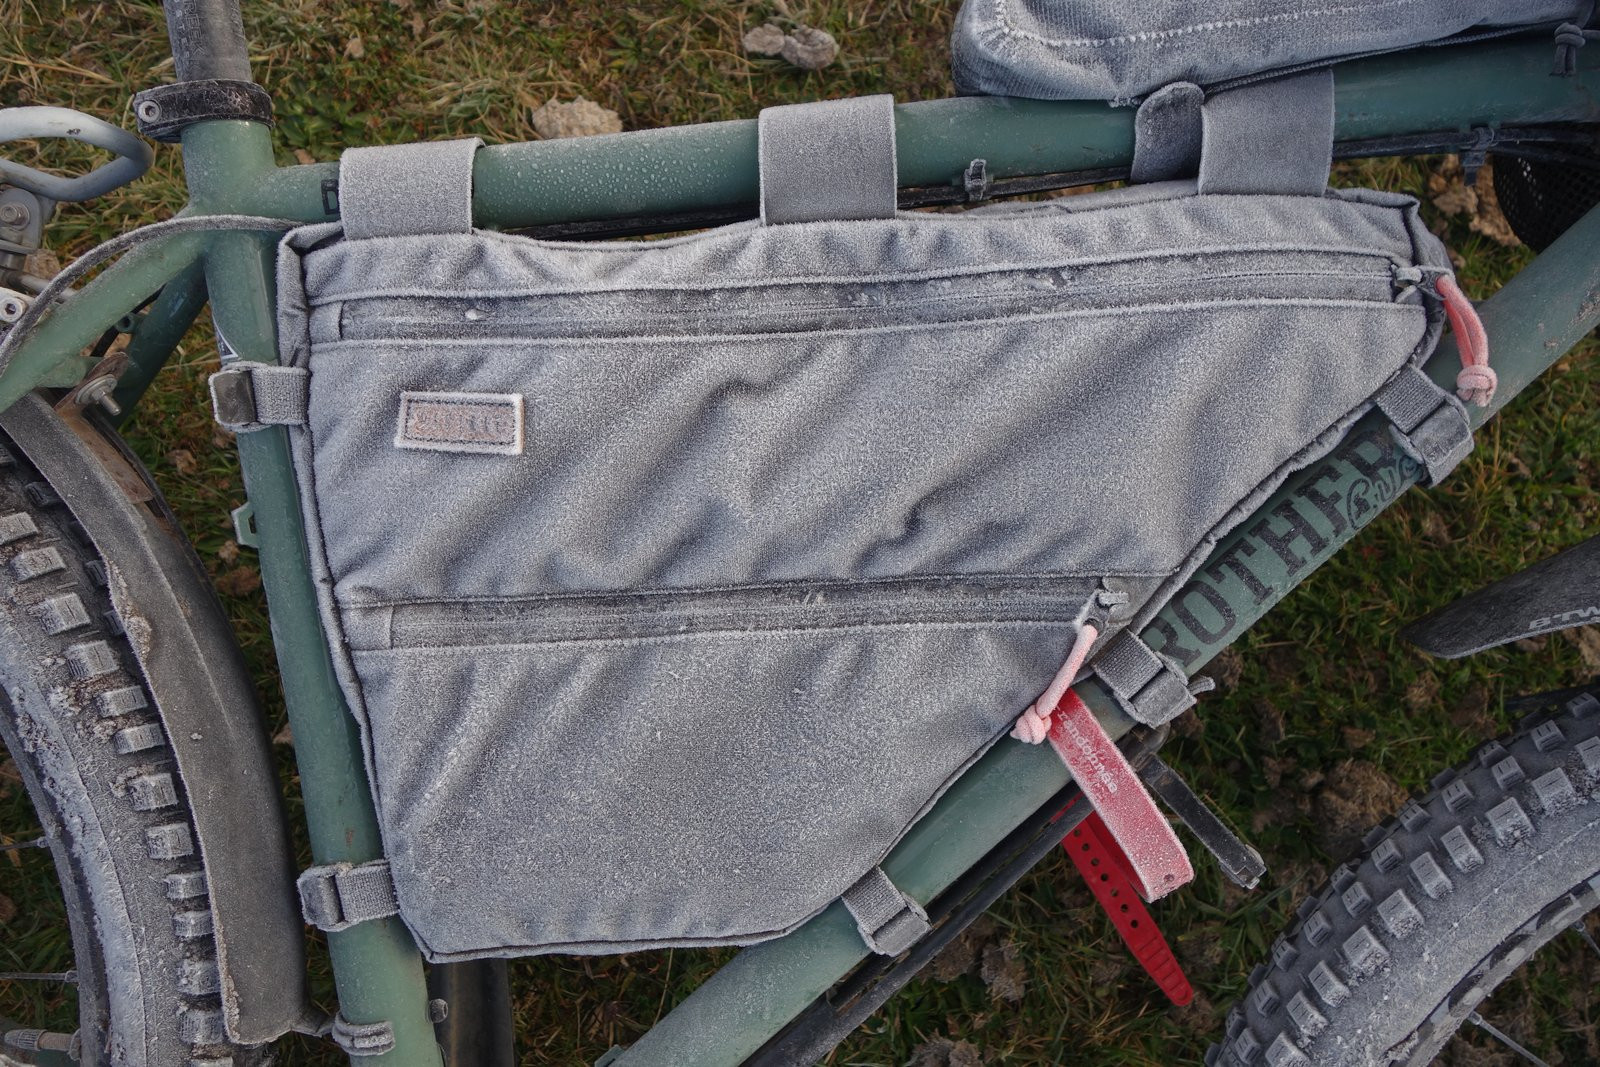 Test : La sacoche Restrap Full Frame Bag voyage à la dure